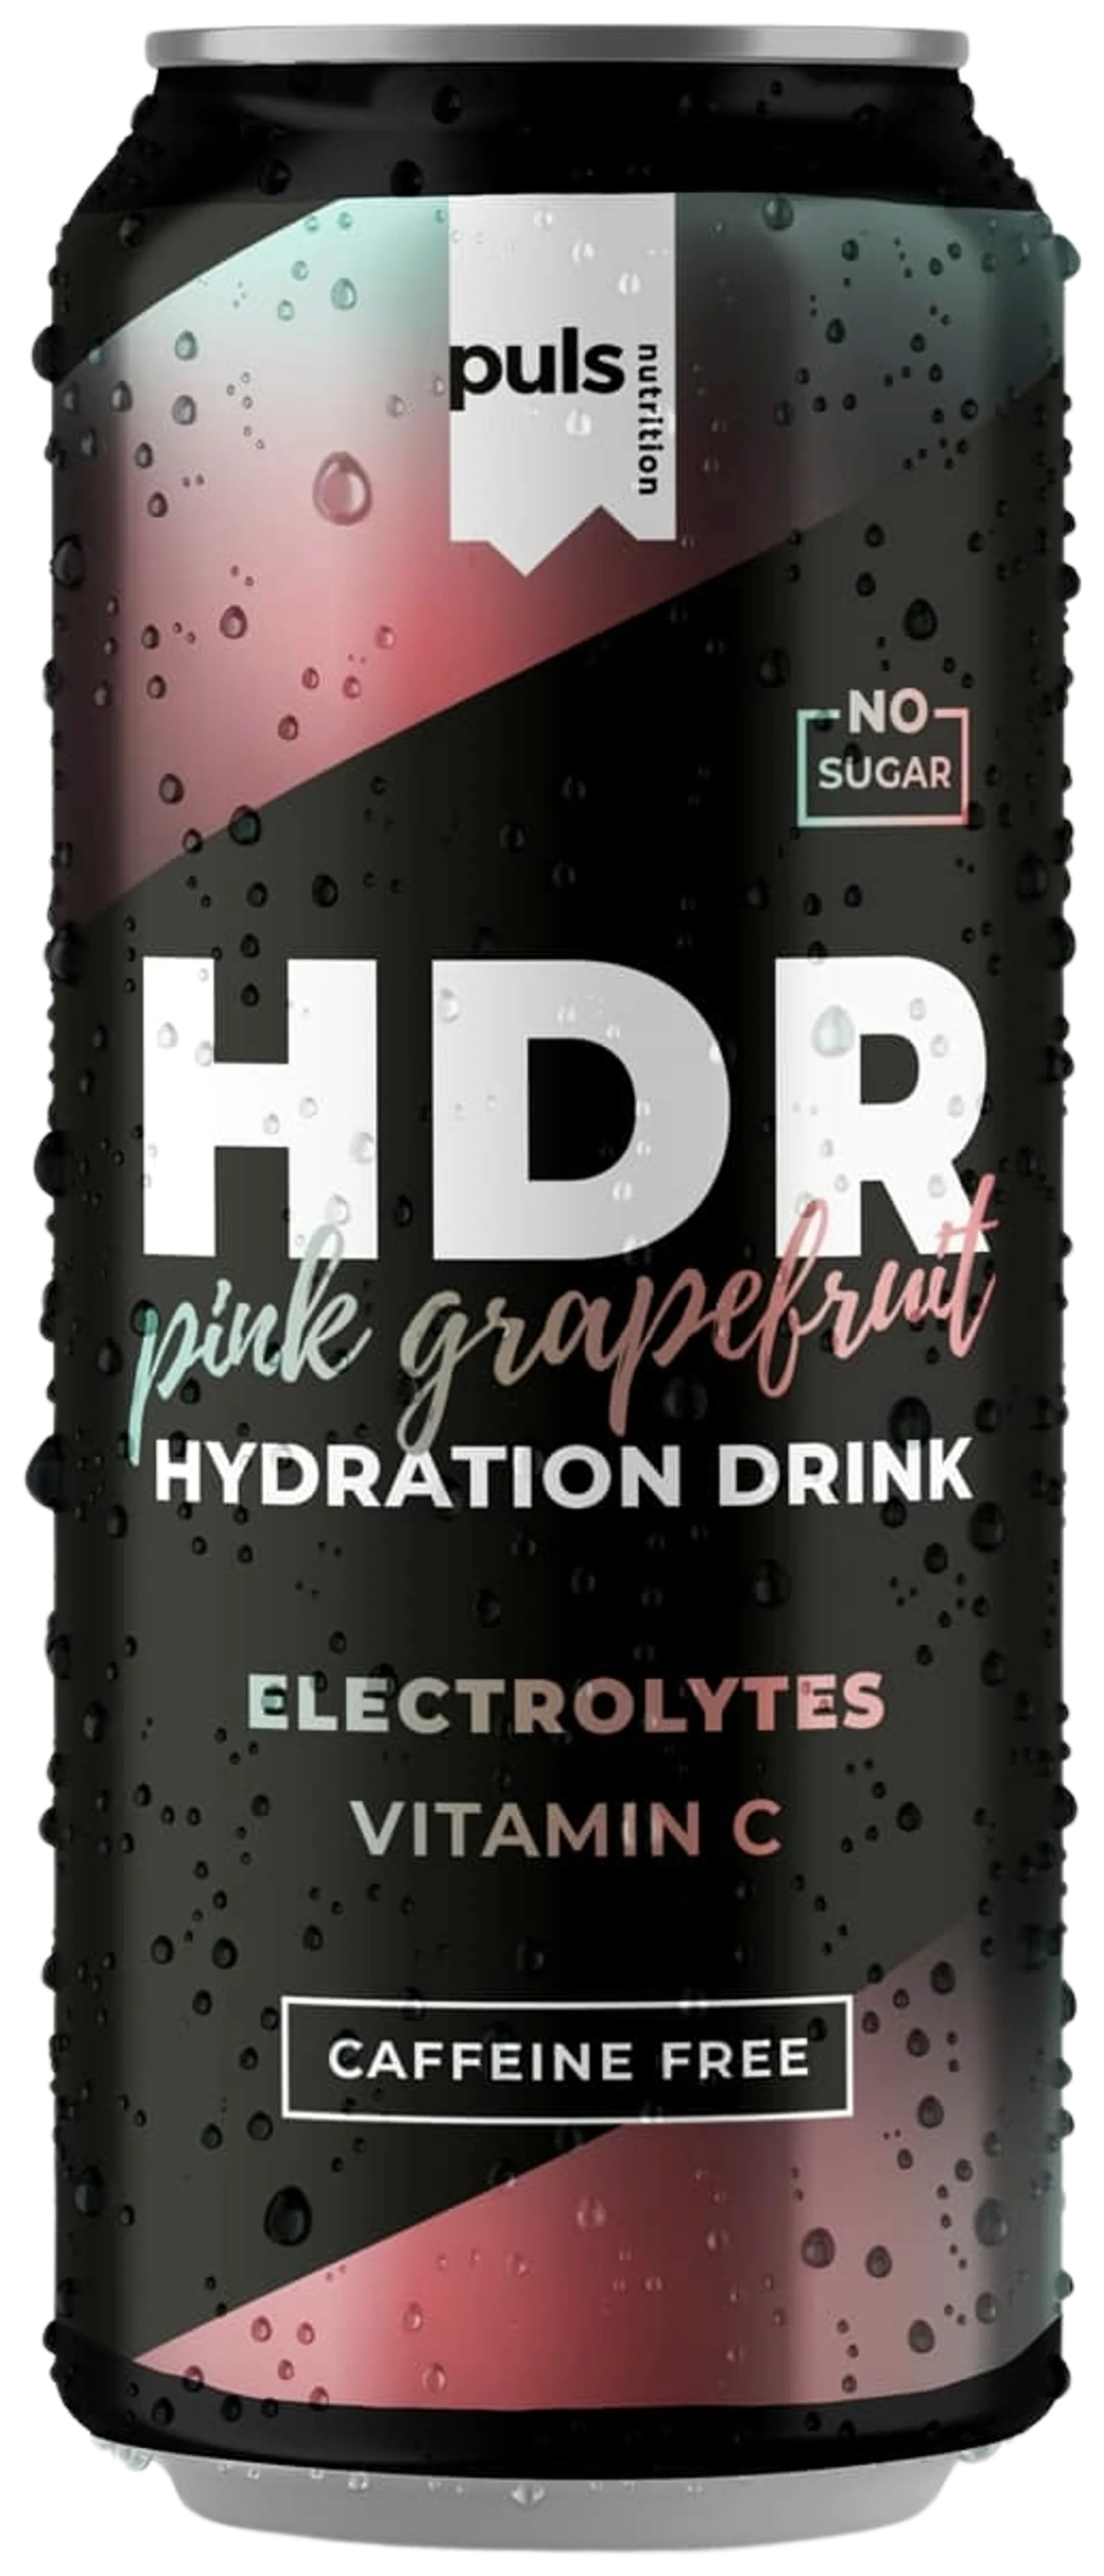 PULS HDR Hydration elektrolyyttijuoma Pink grapefruit 330ml